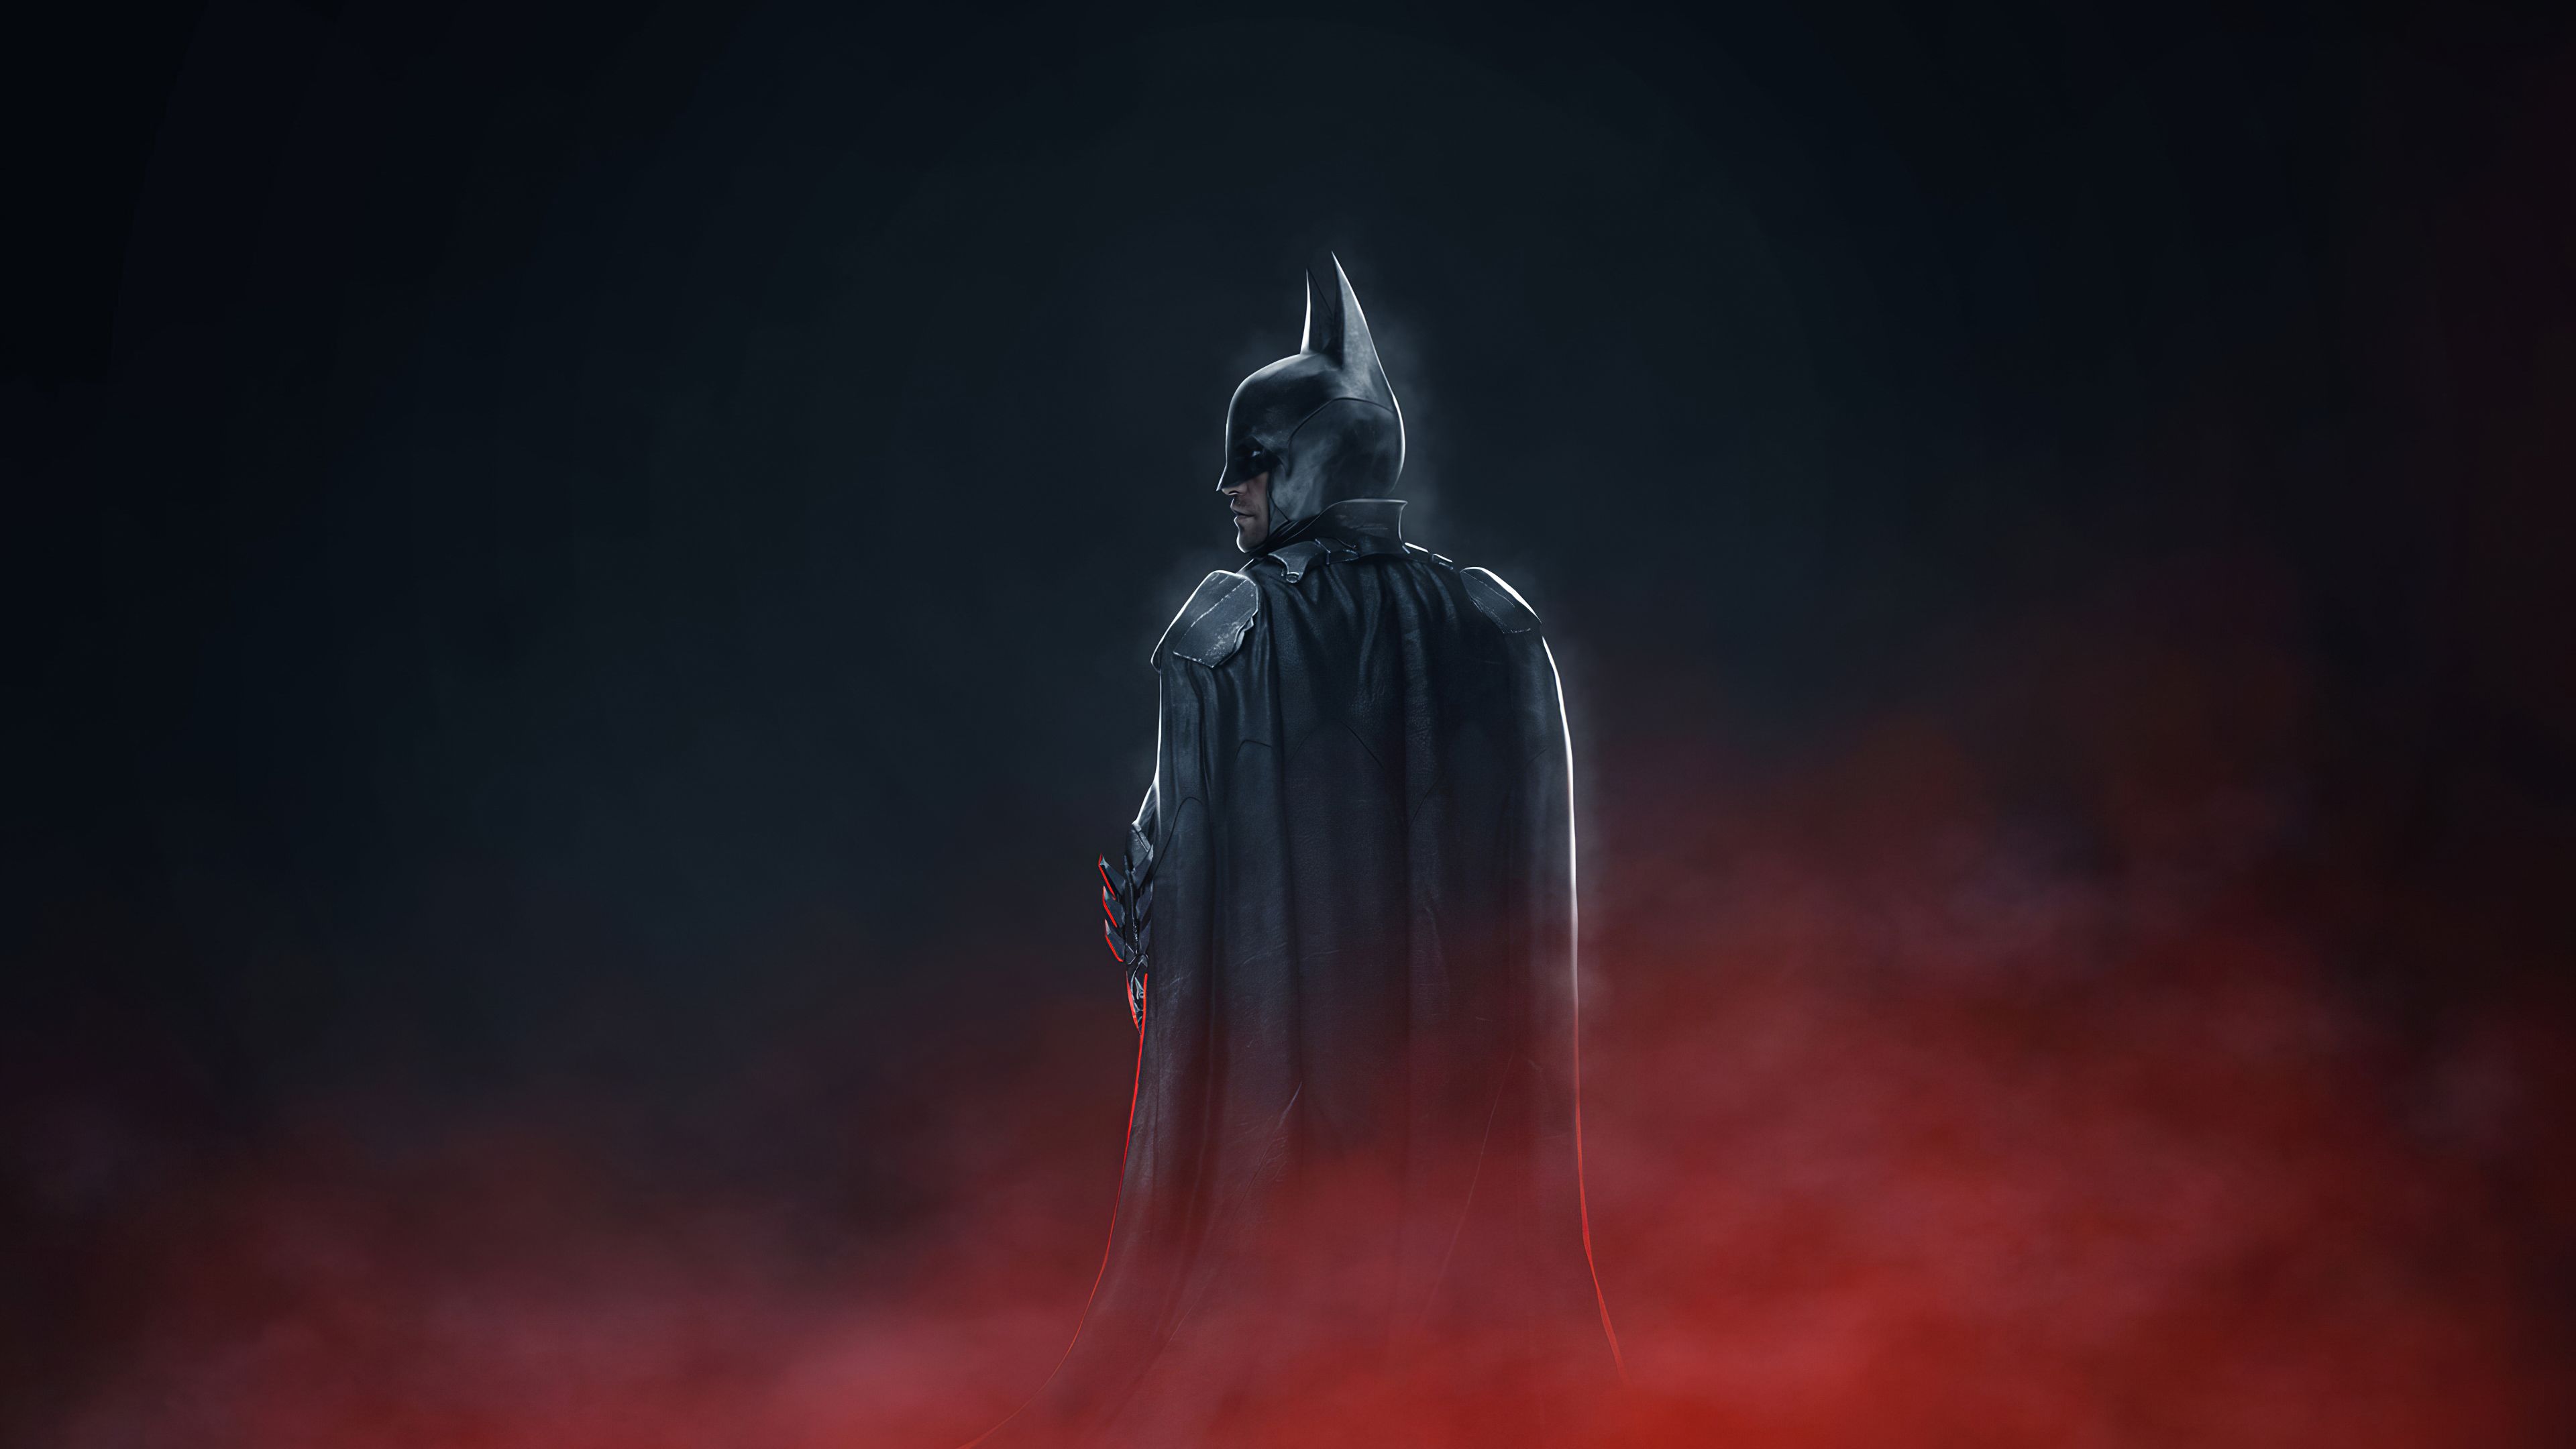 Robert The Batman Pattison Art Wallpaper, HD Superheroes 4K Wallpaper, Image, Photo and Background